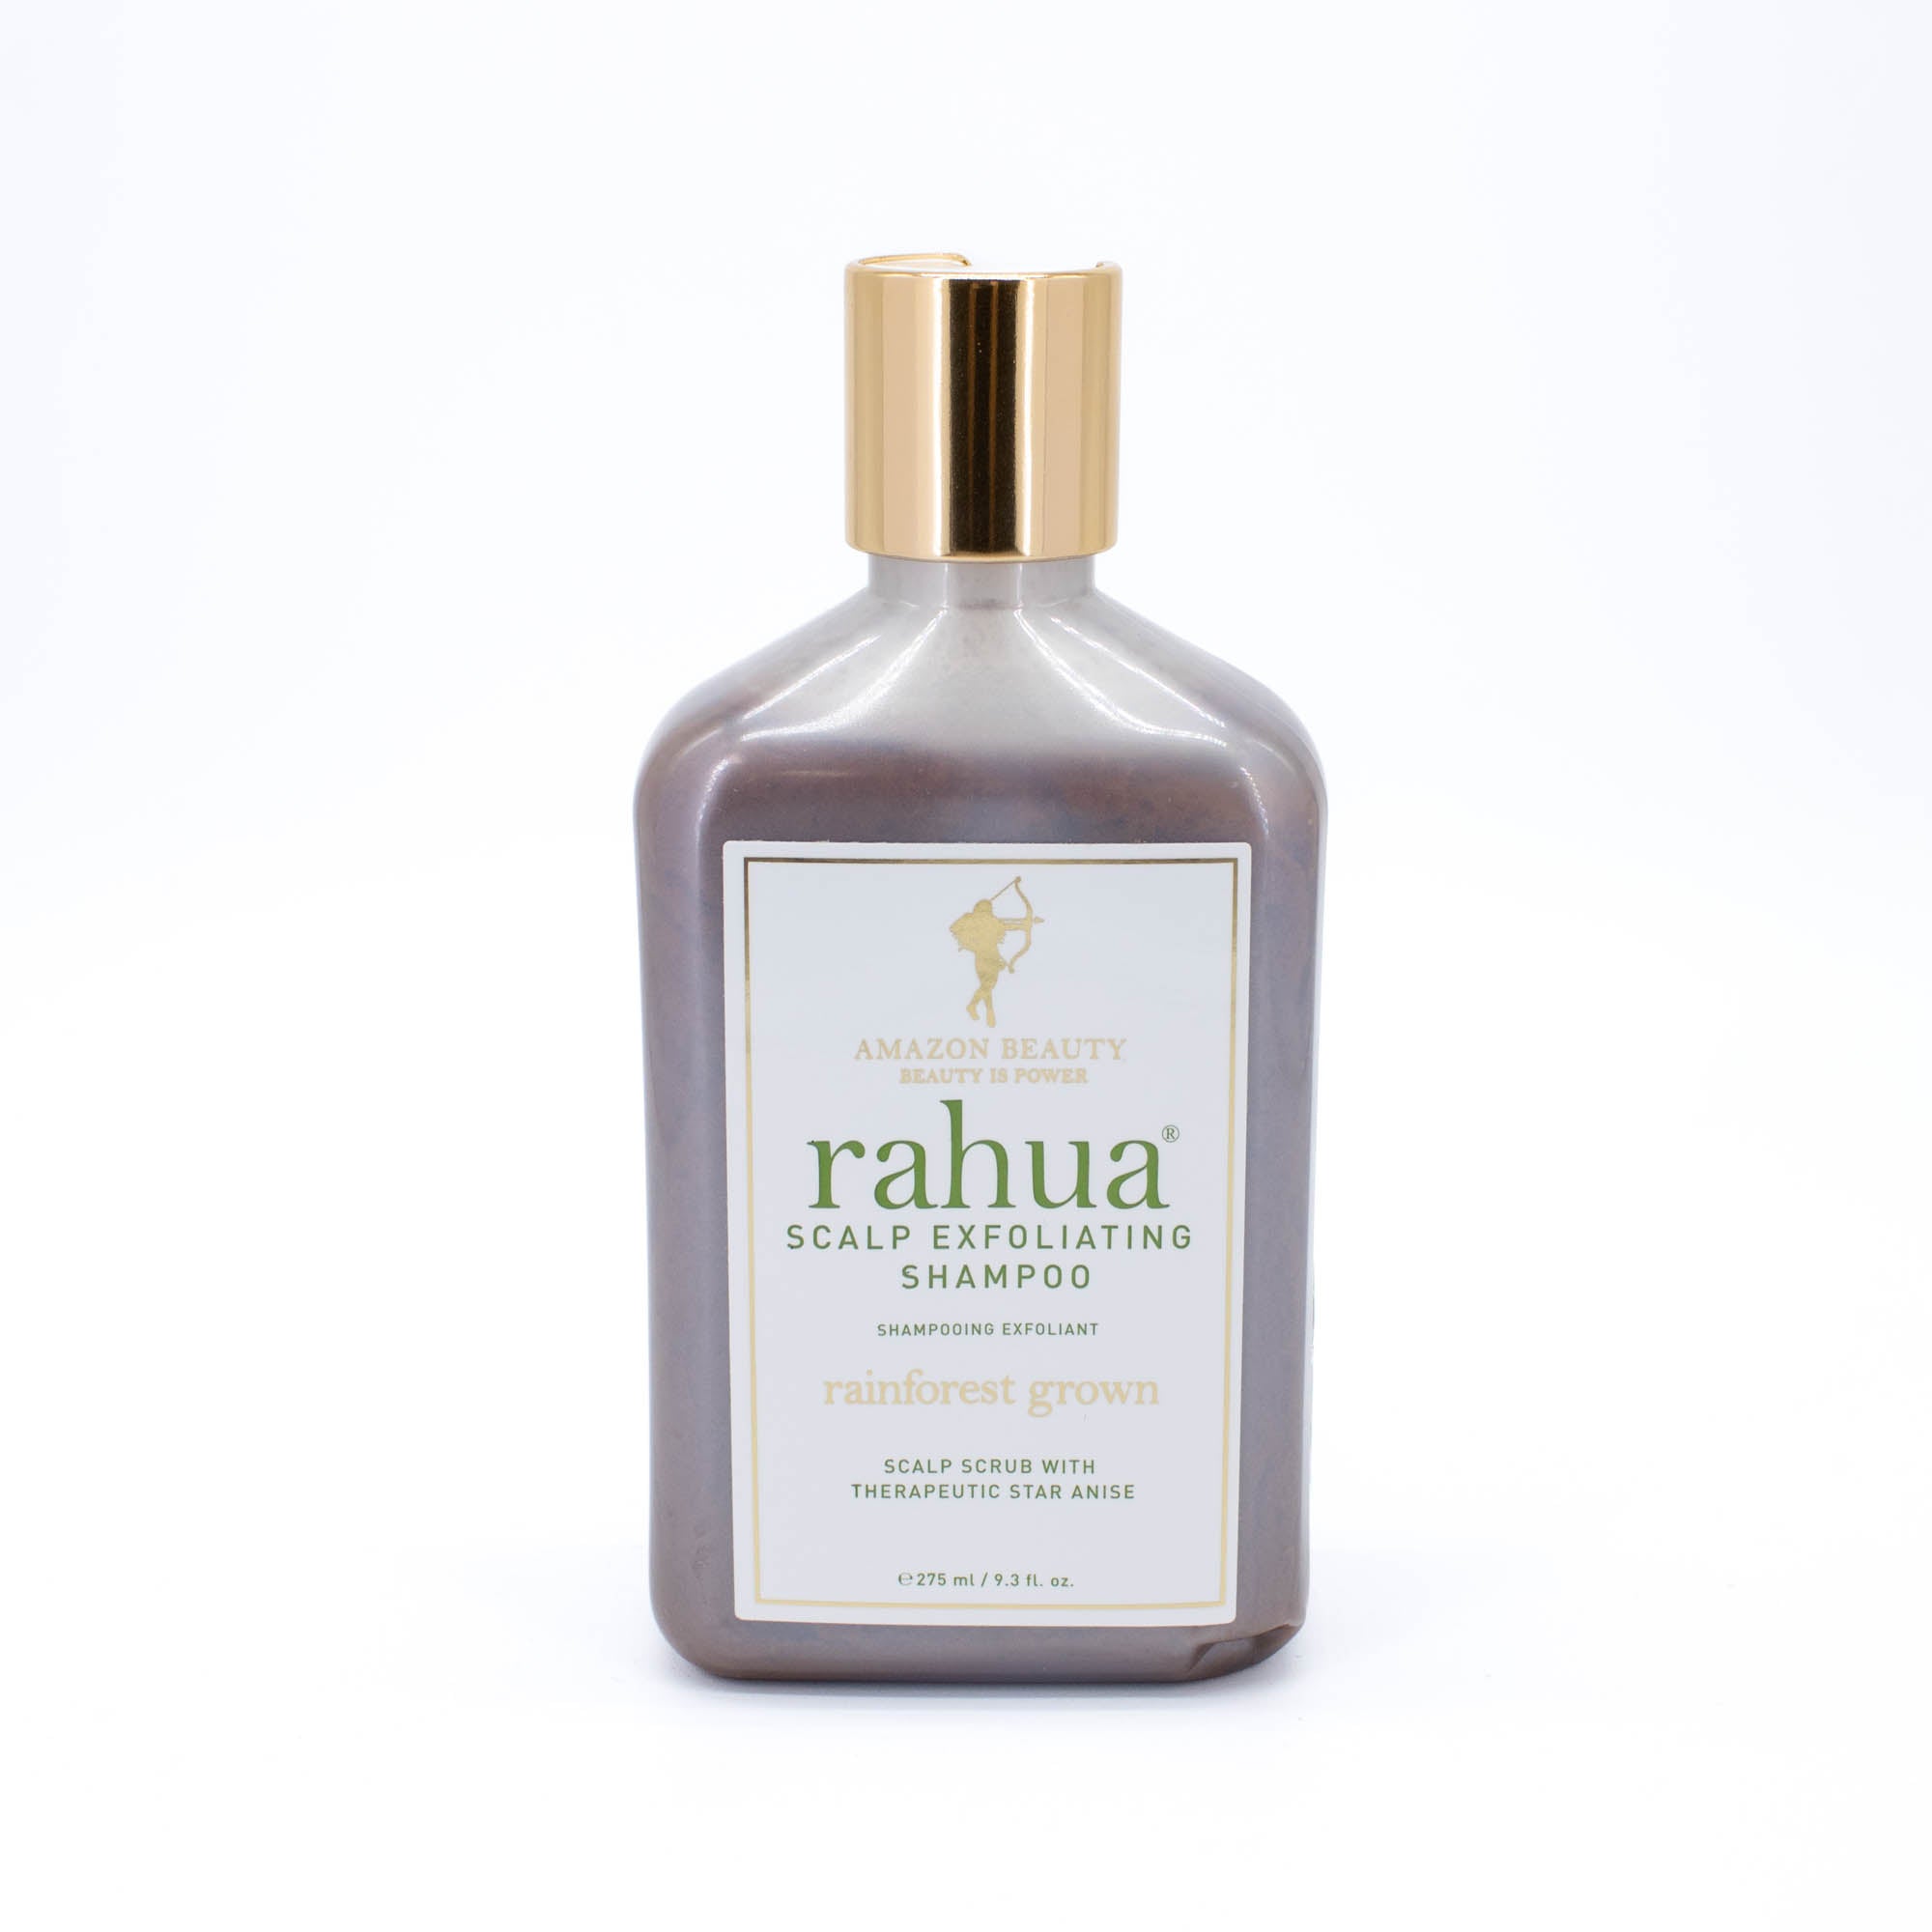 rahua Scalp Exfoliating Shampoo 9.3oz - Small Amount Missing